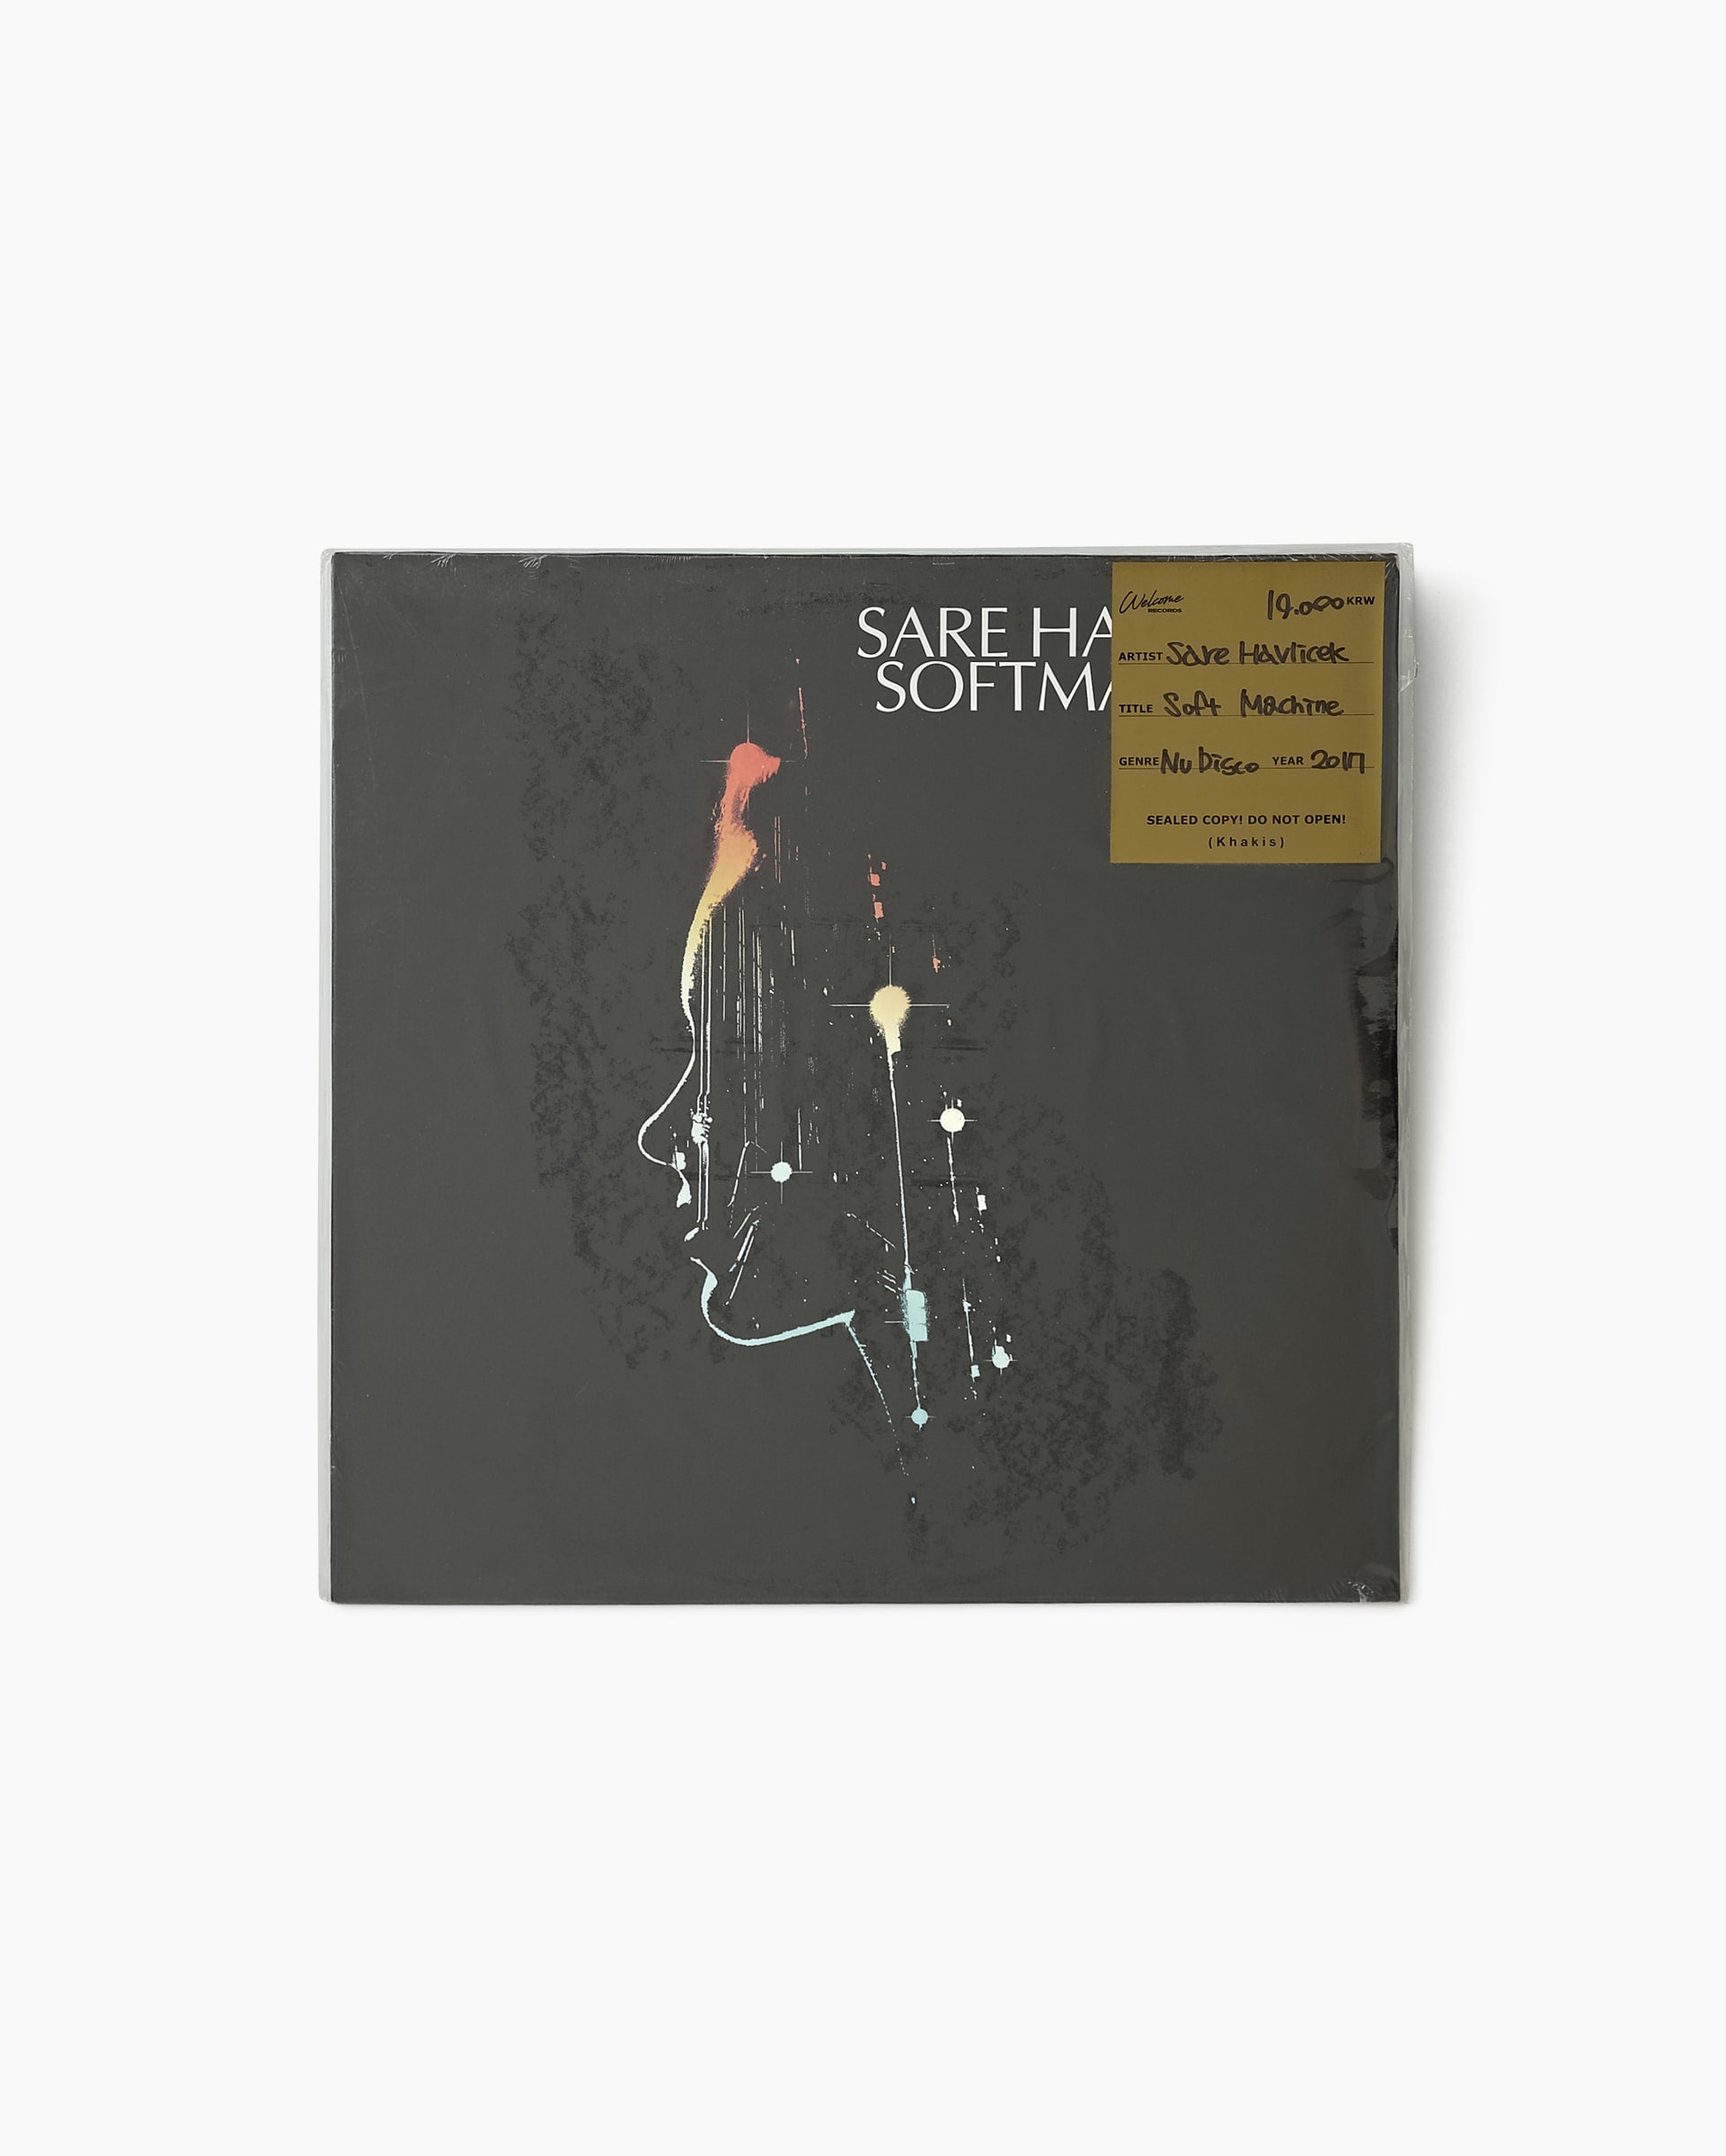 Sare Havlicek - Soft Machine